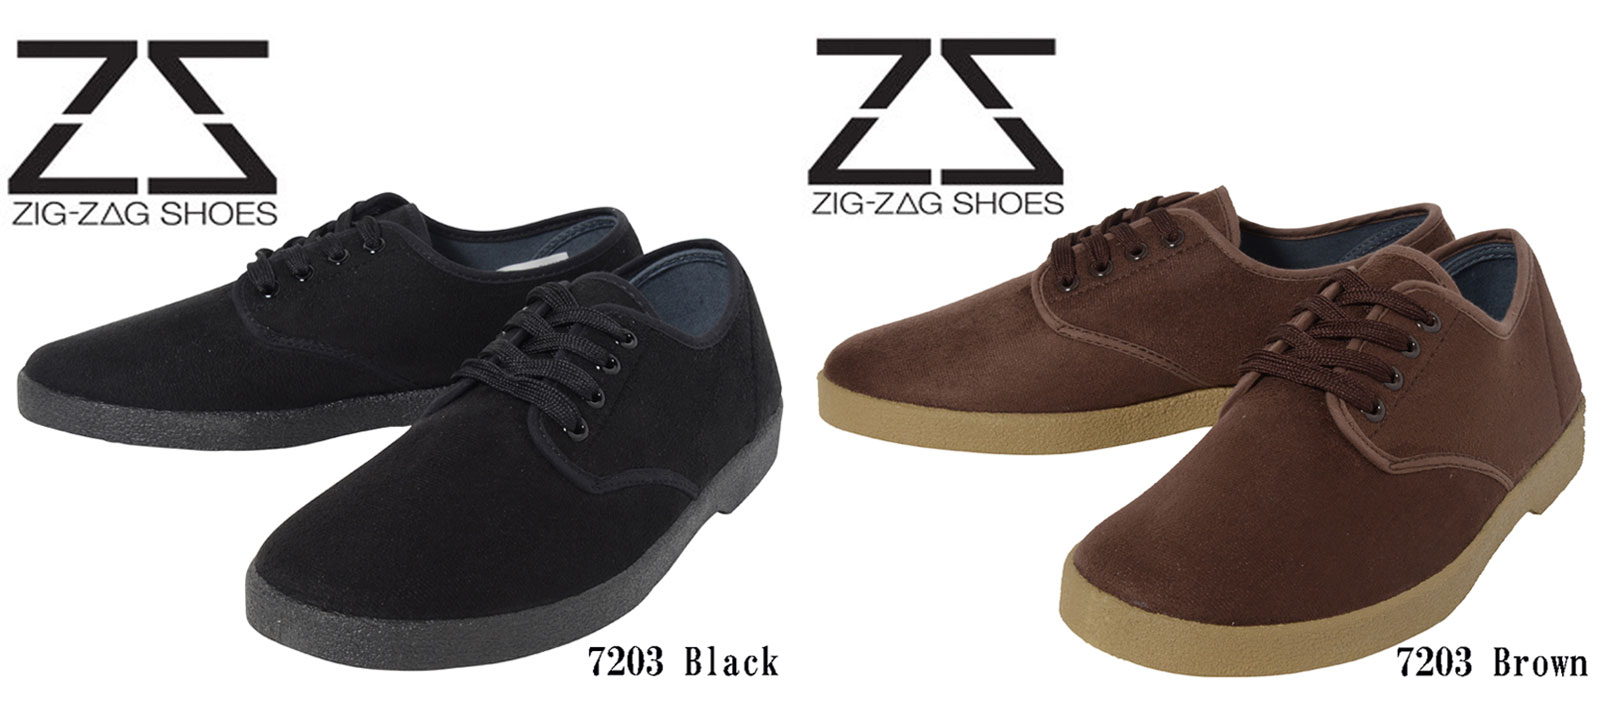 ZIG-ZAG shoes ジグザグシューズ ※7203 シリーズ※カラー:ブラック ブラウン 流行の予感素材はスェードタイプ かなりオシャレ※再入荷しました